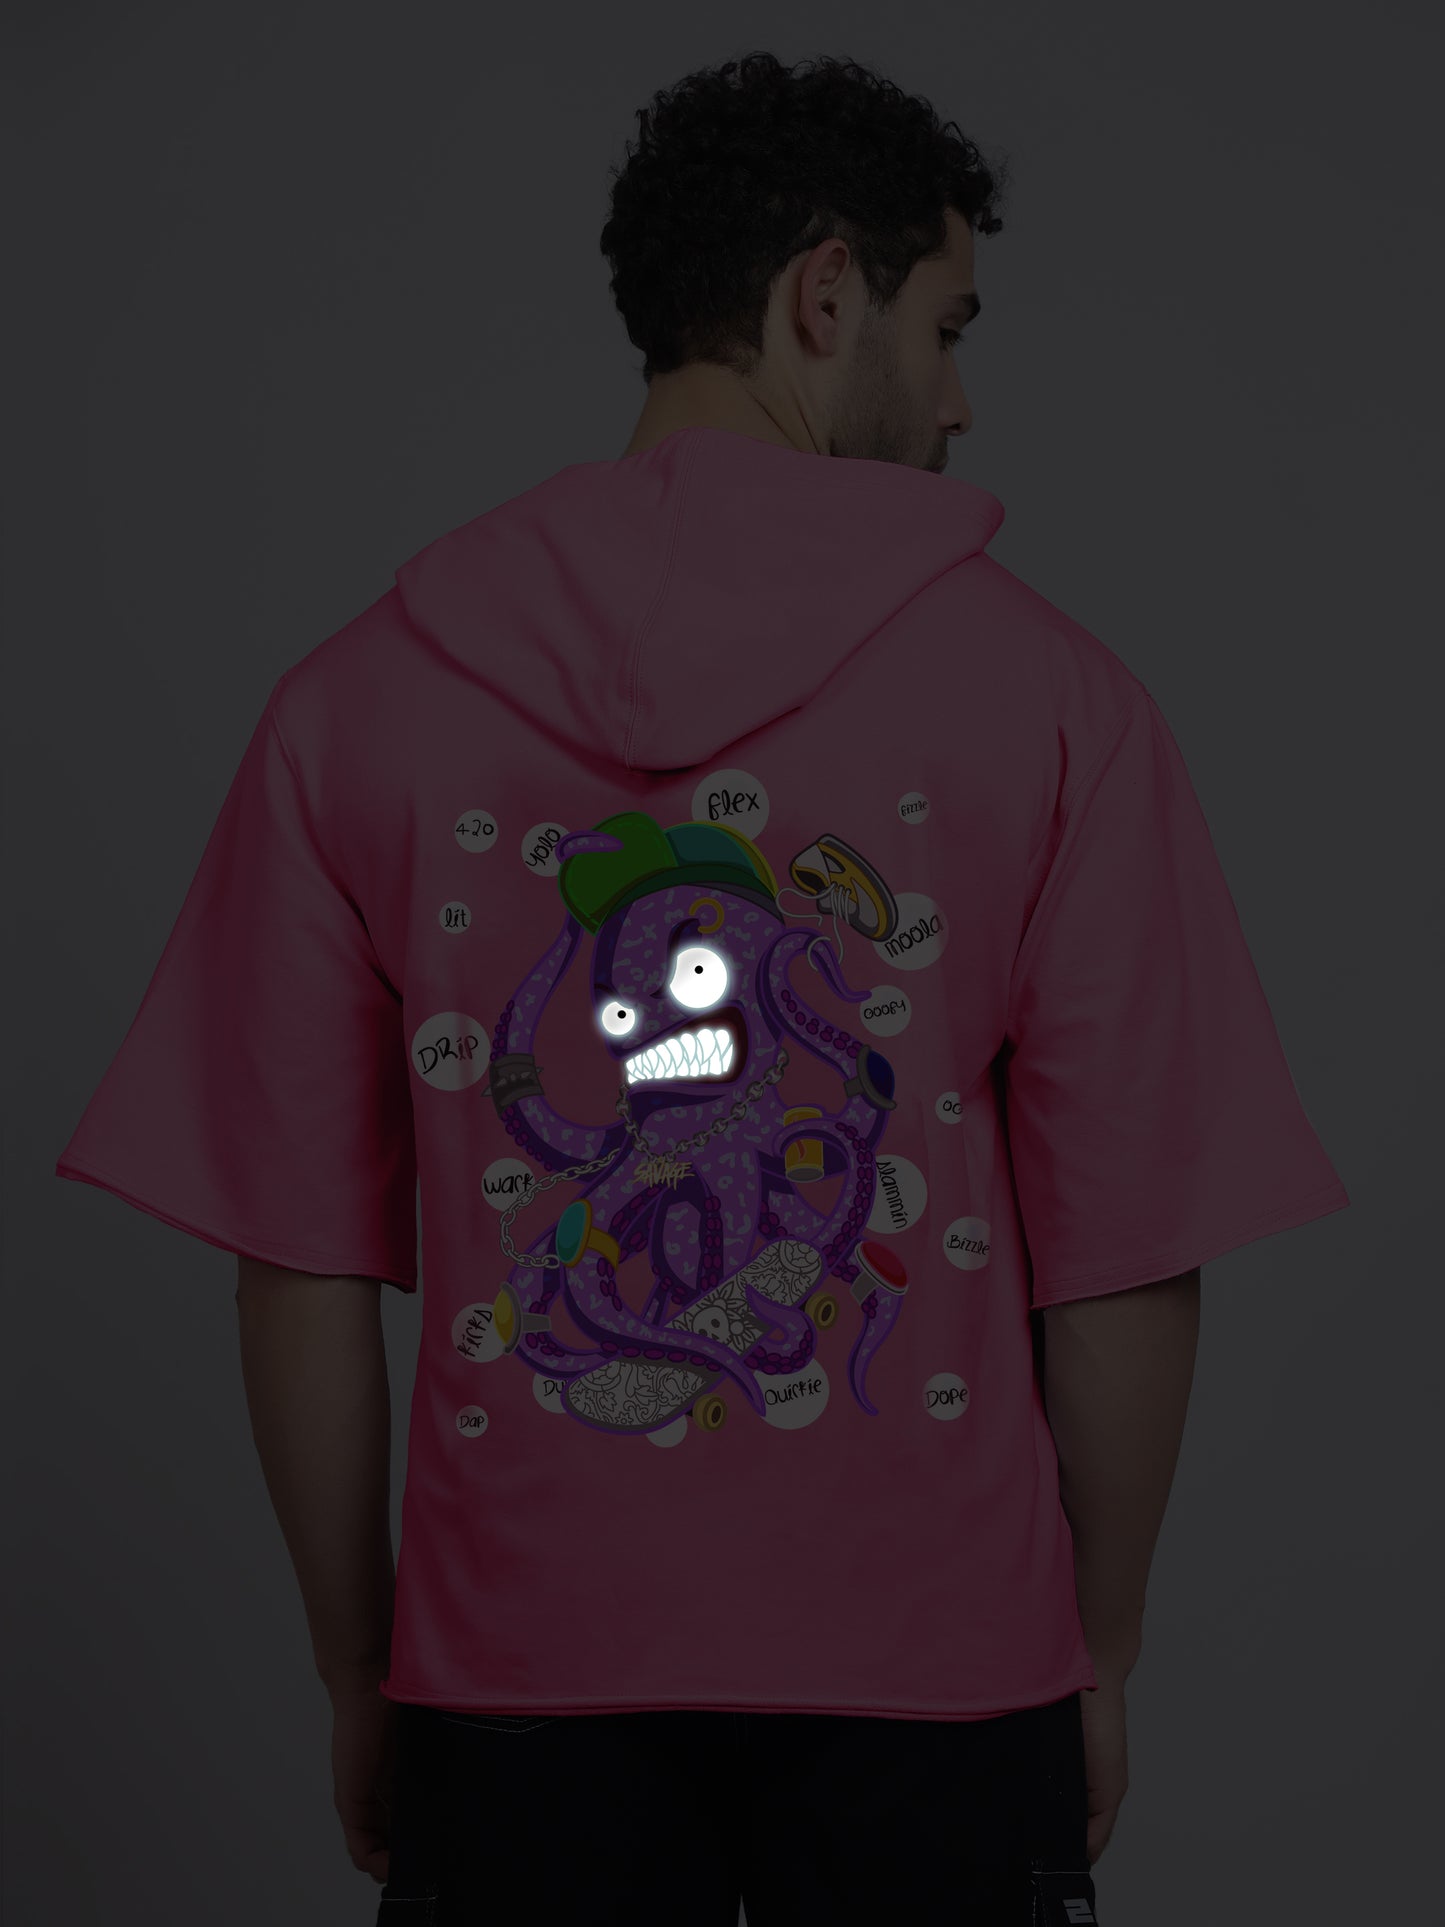 Octopus Kimono sleeve All season Hoodie T-Shirt (Baby Pink) - Wearduds